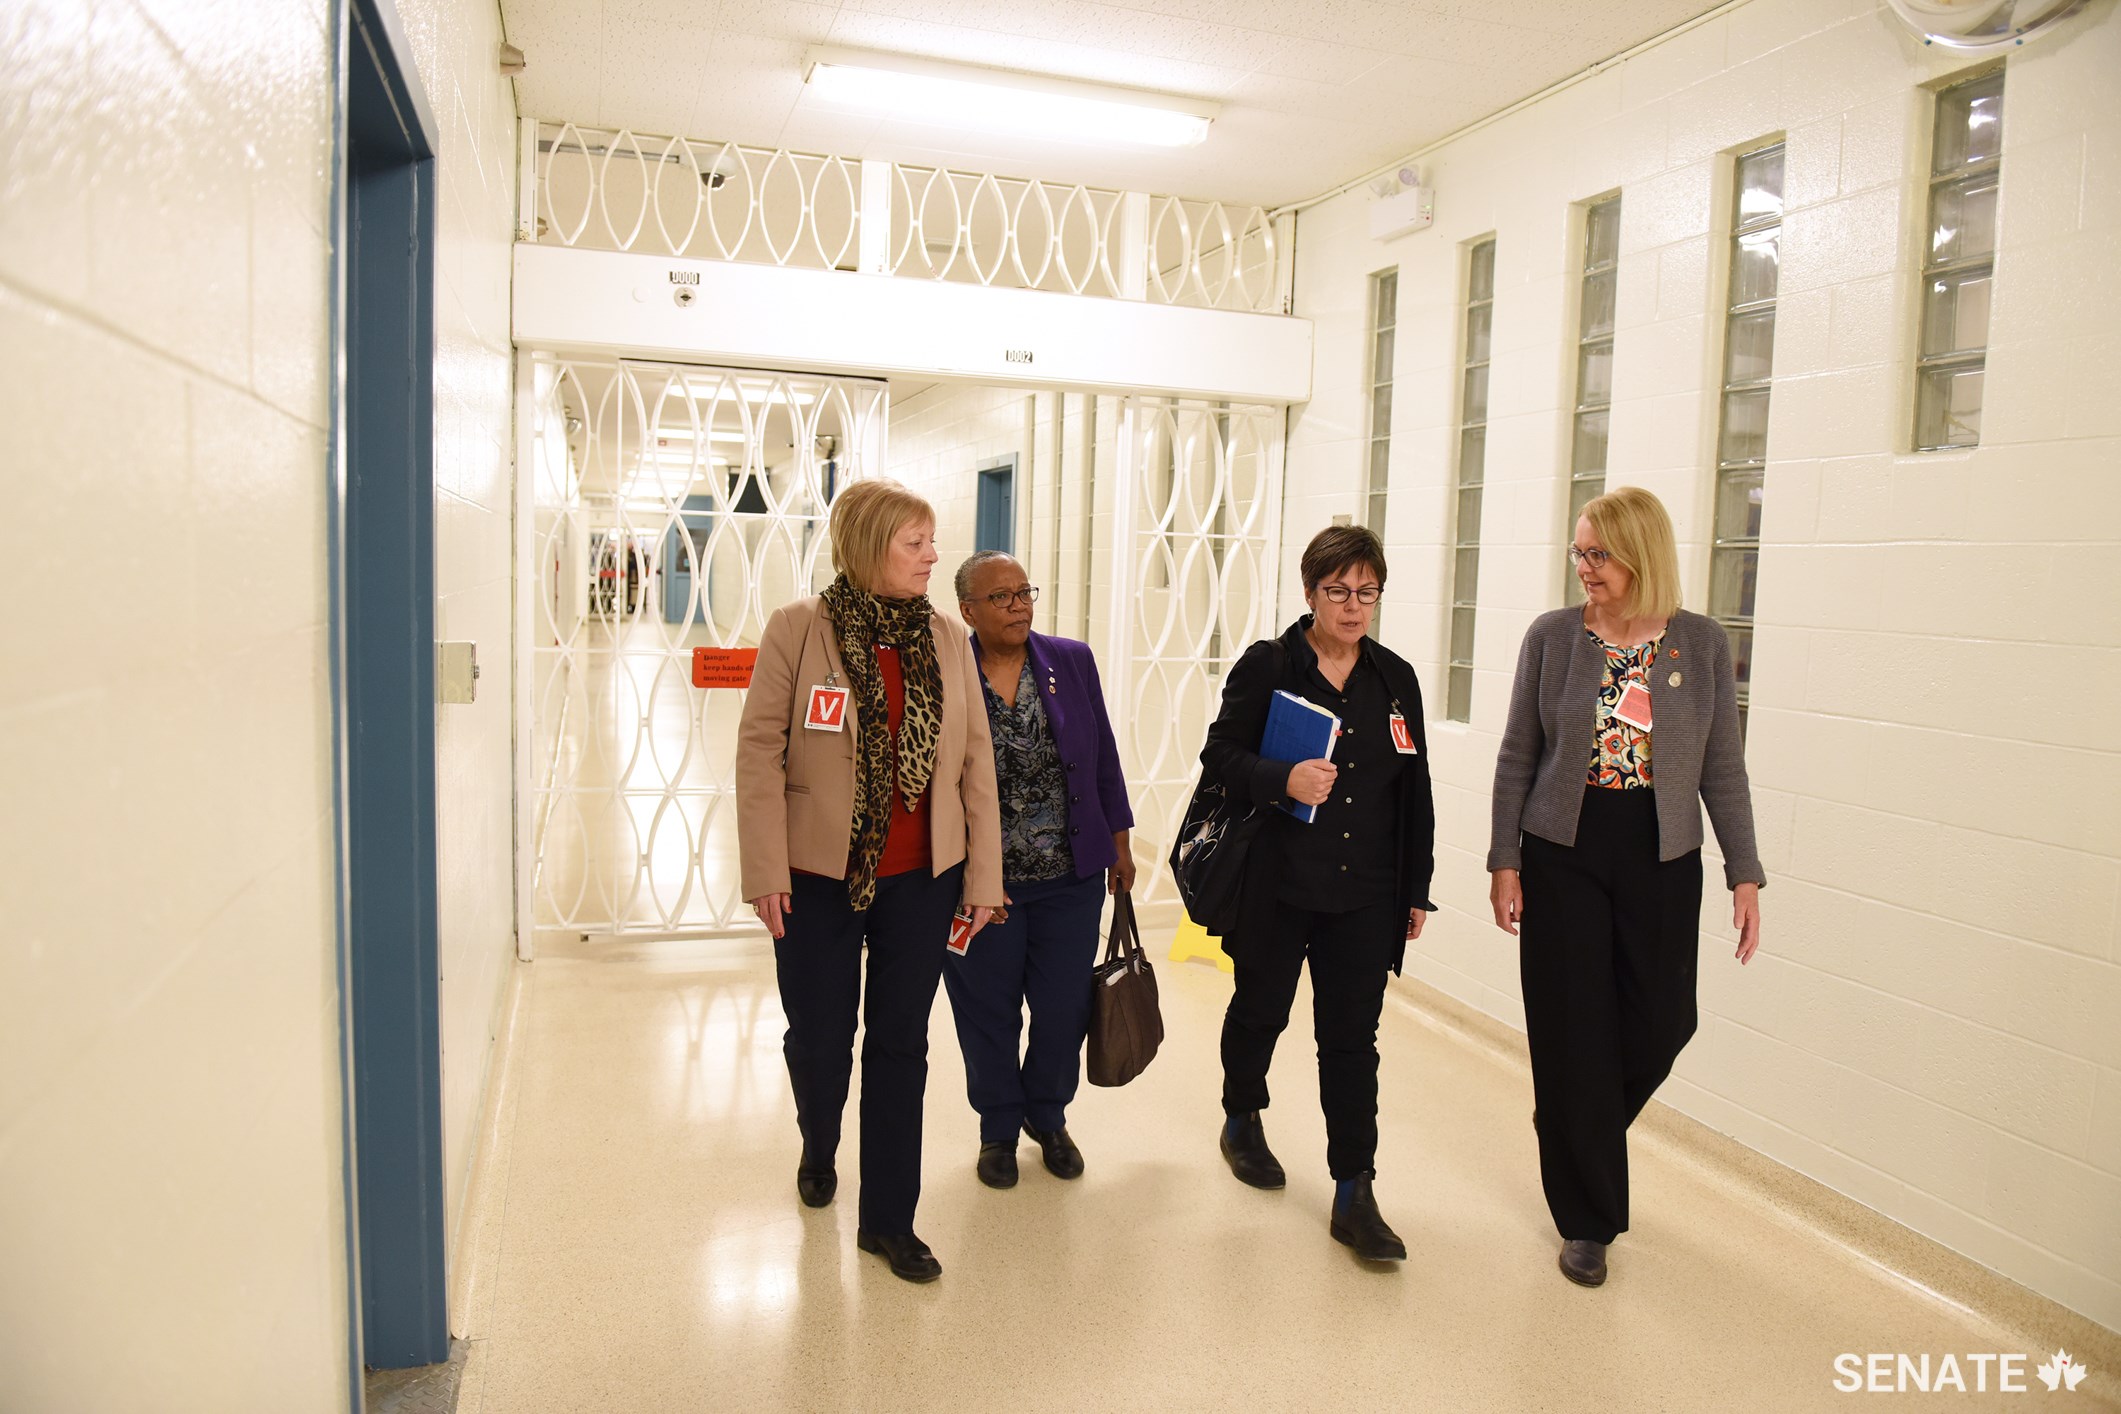 From left, Senators Nancy Hartling, Wanda Thomas Bernard, Kim Pate and Jane Cordy walk through the halls of the Atlantic Institution, a men’s maximum security facility in New Brunswick.